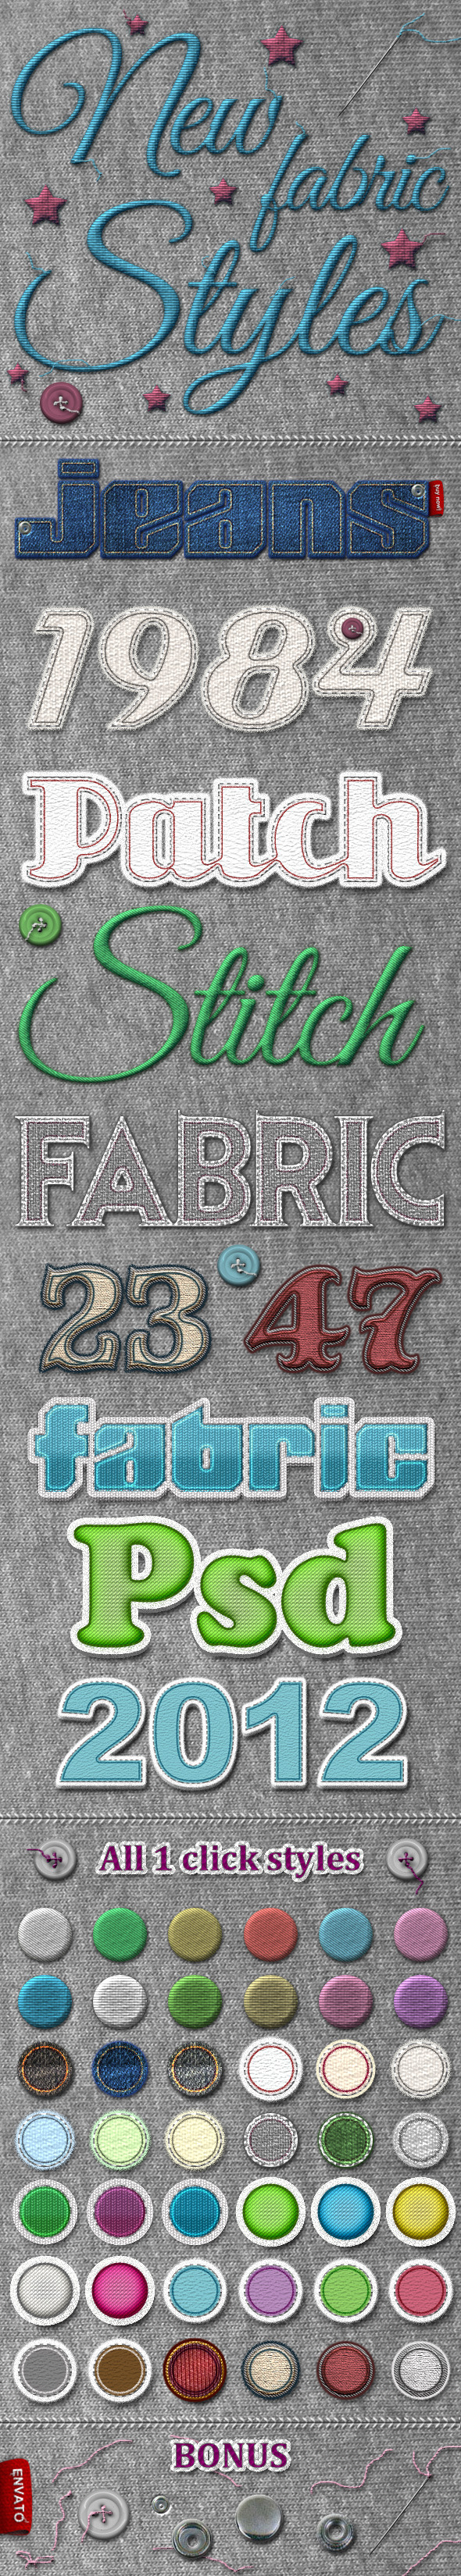 New Fabric Styles